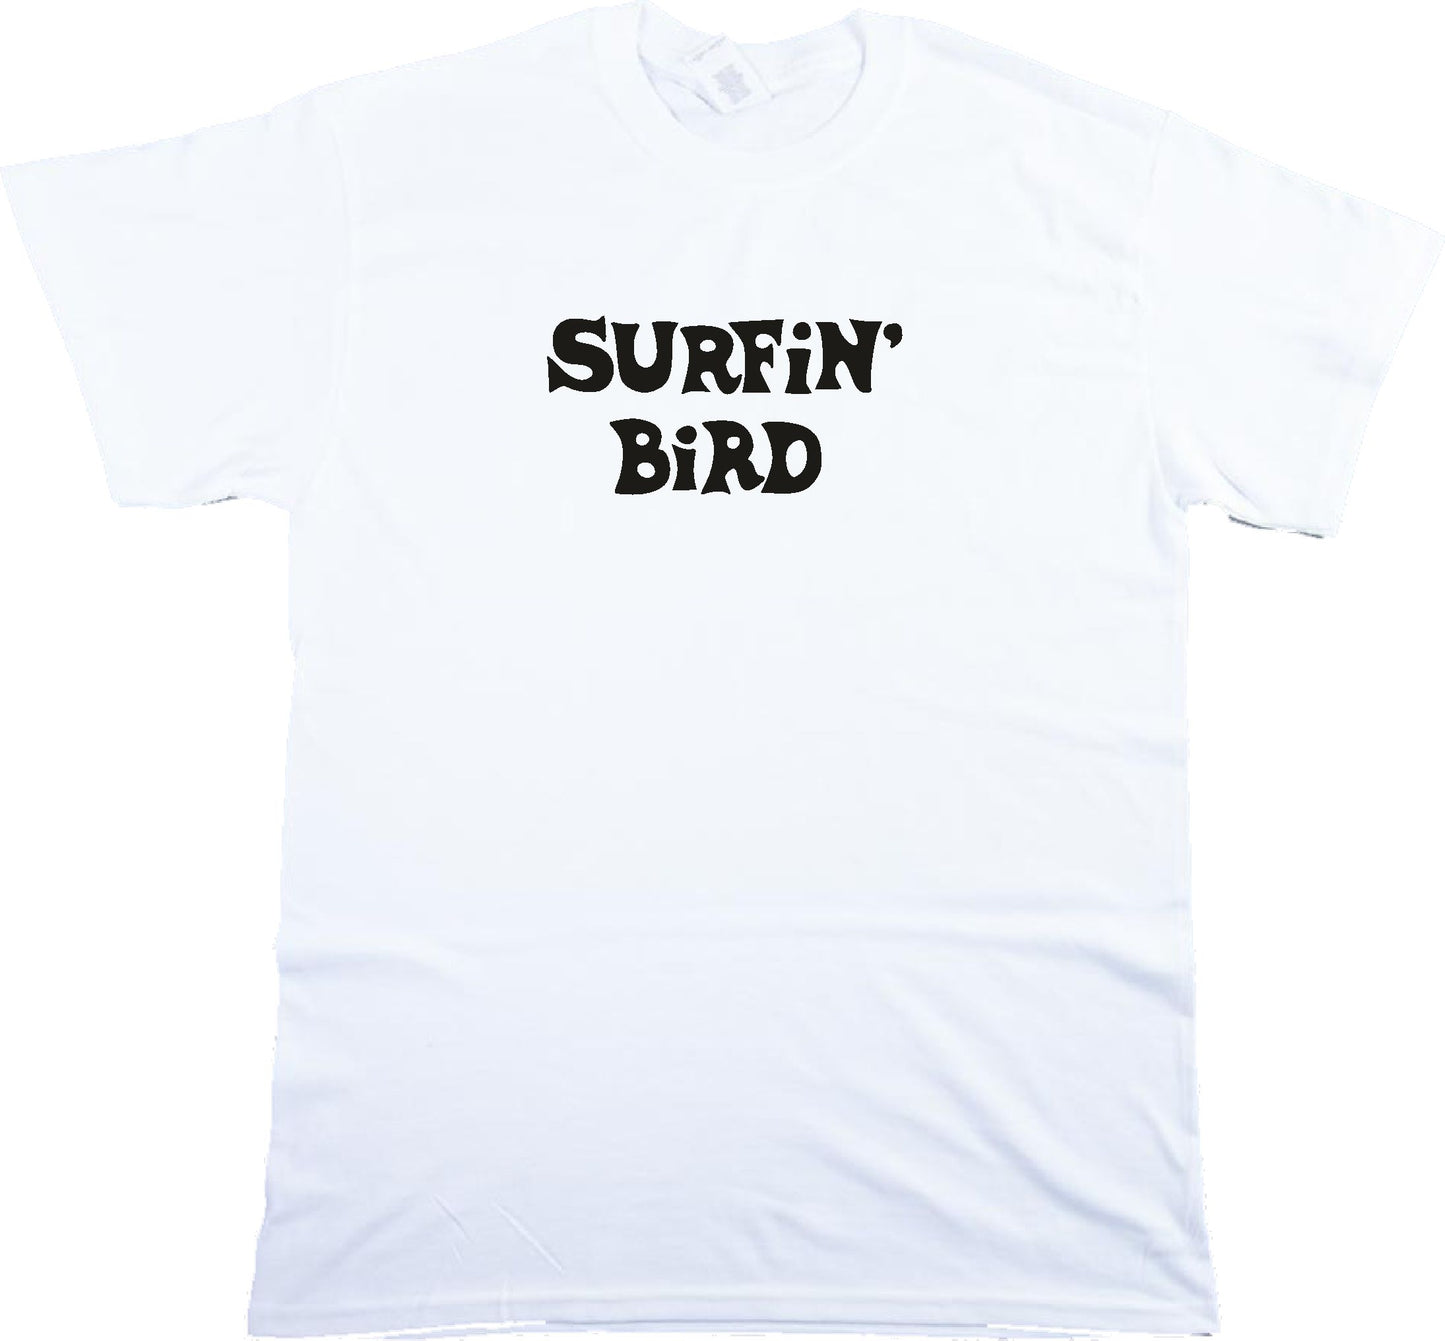 Surfin' Bird T-Shirt - 60s Retro Surf Rock, Various Colours